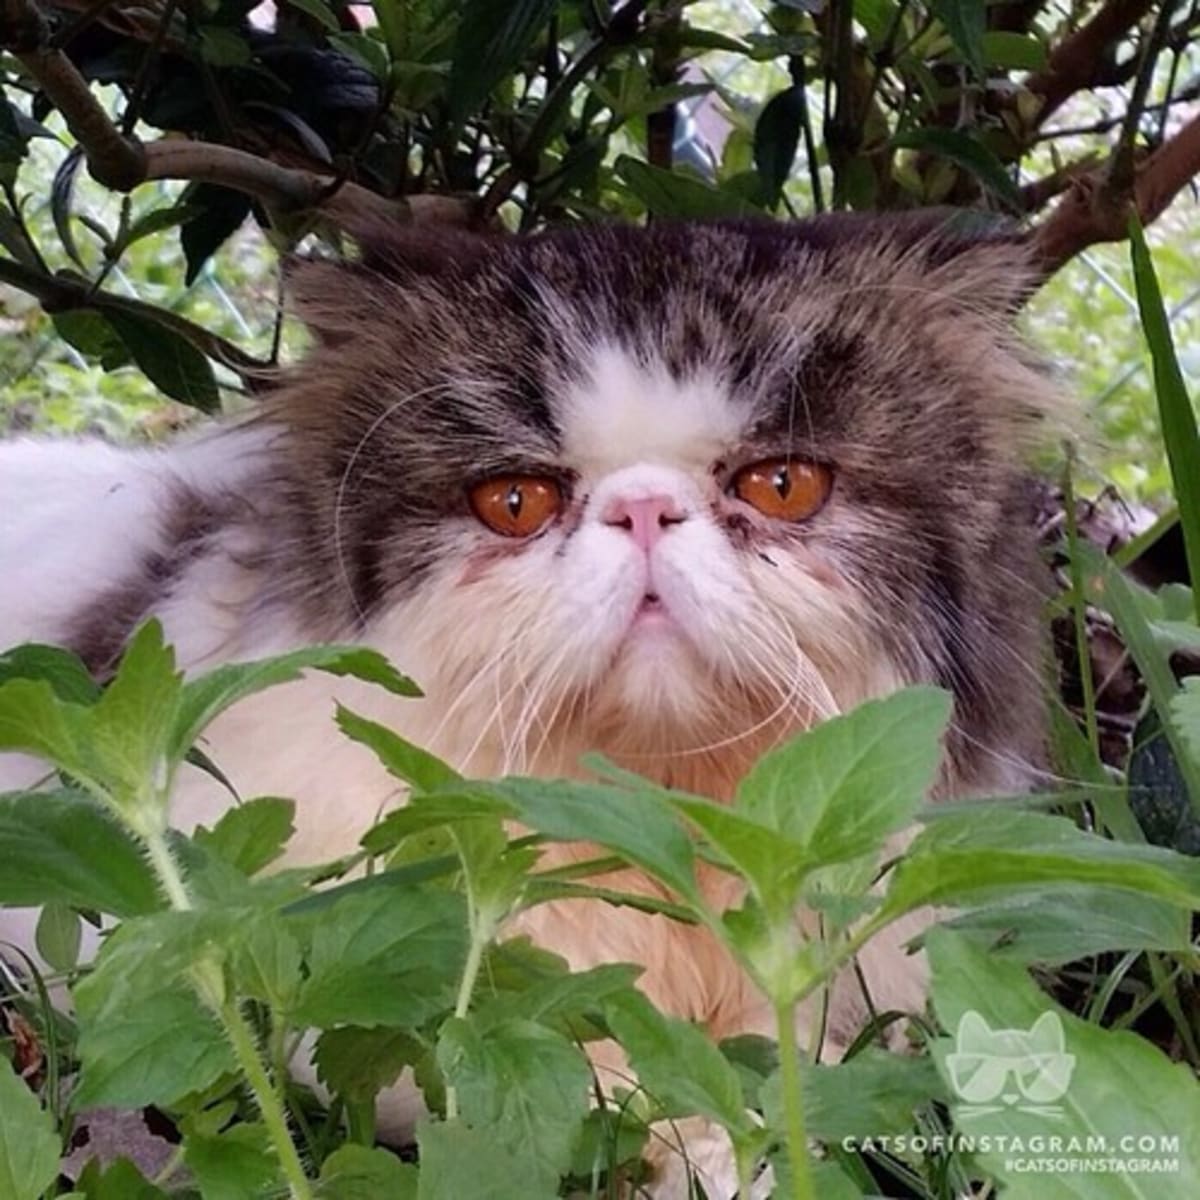 We Tumblforya: Cats of Instagram | Complex - 1200 x 1200 jpeg 131kB